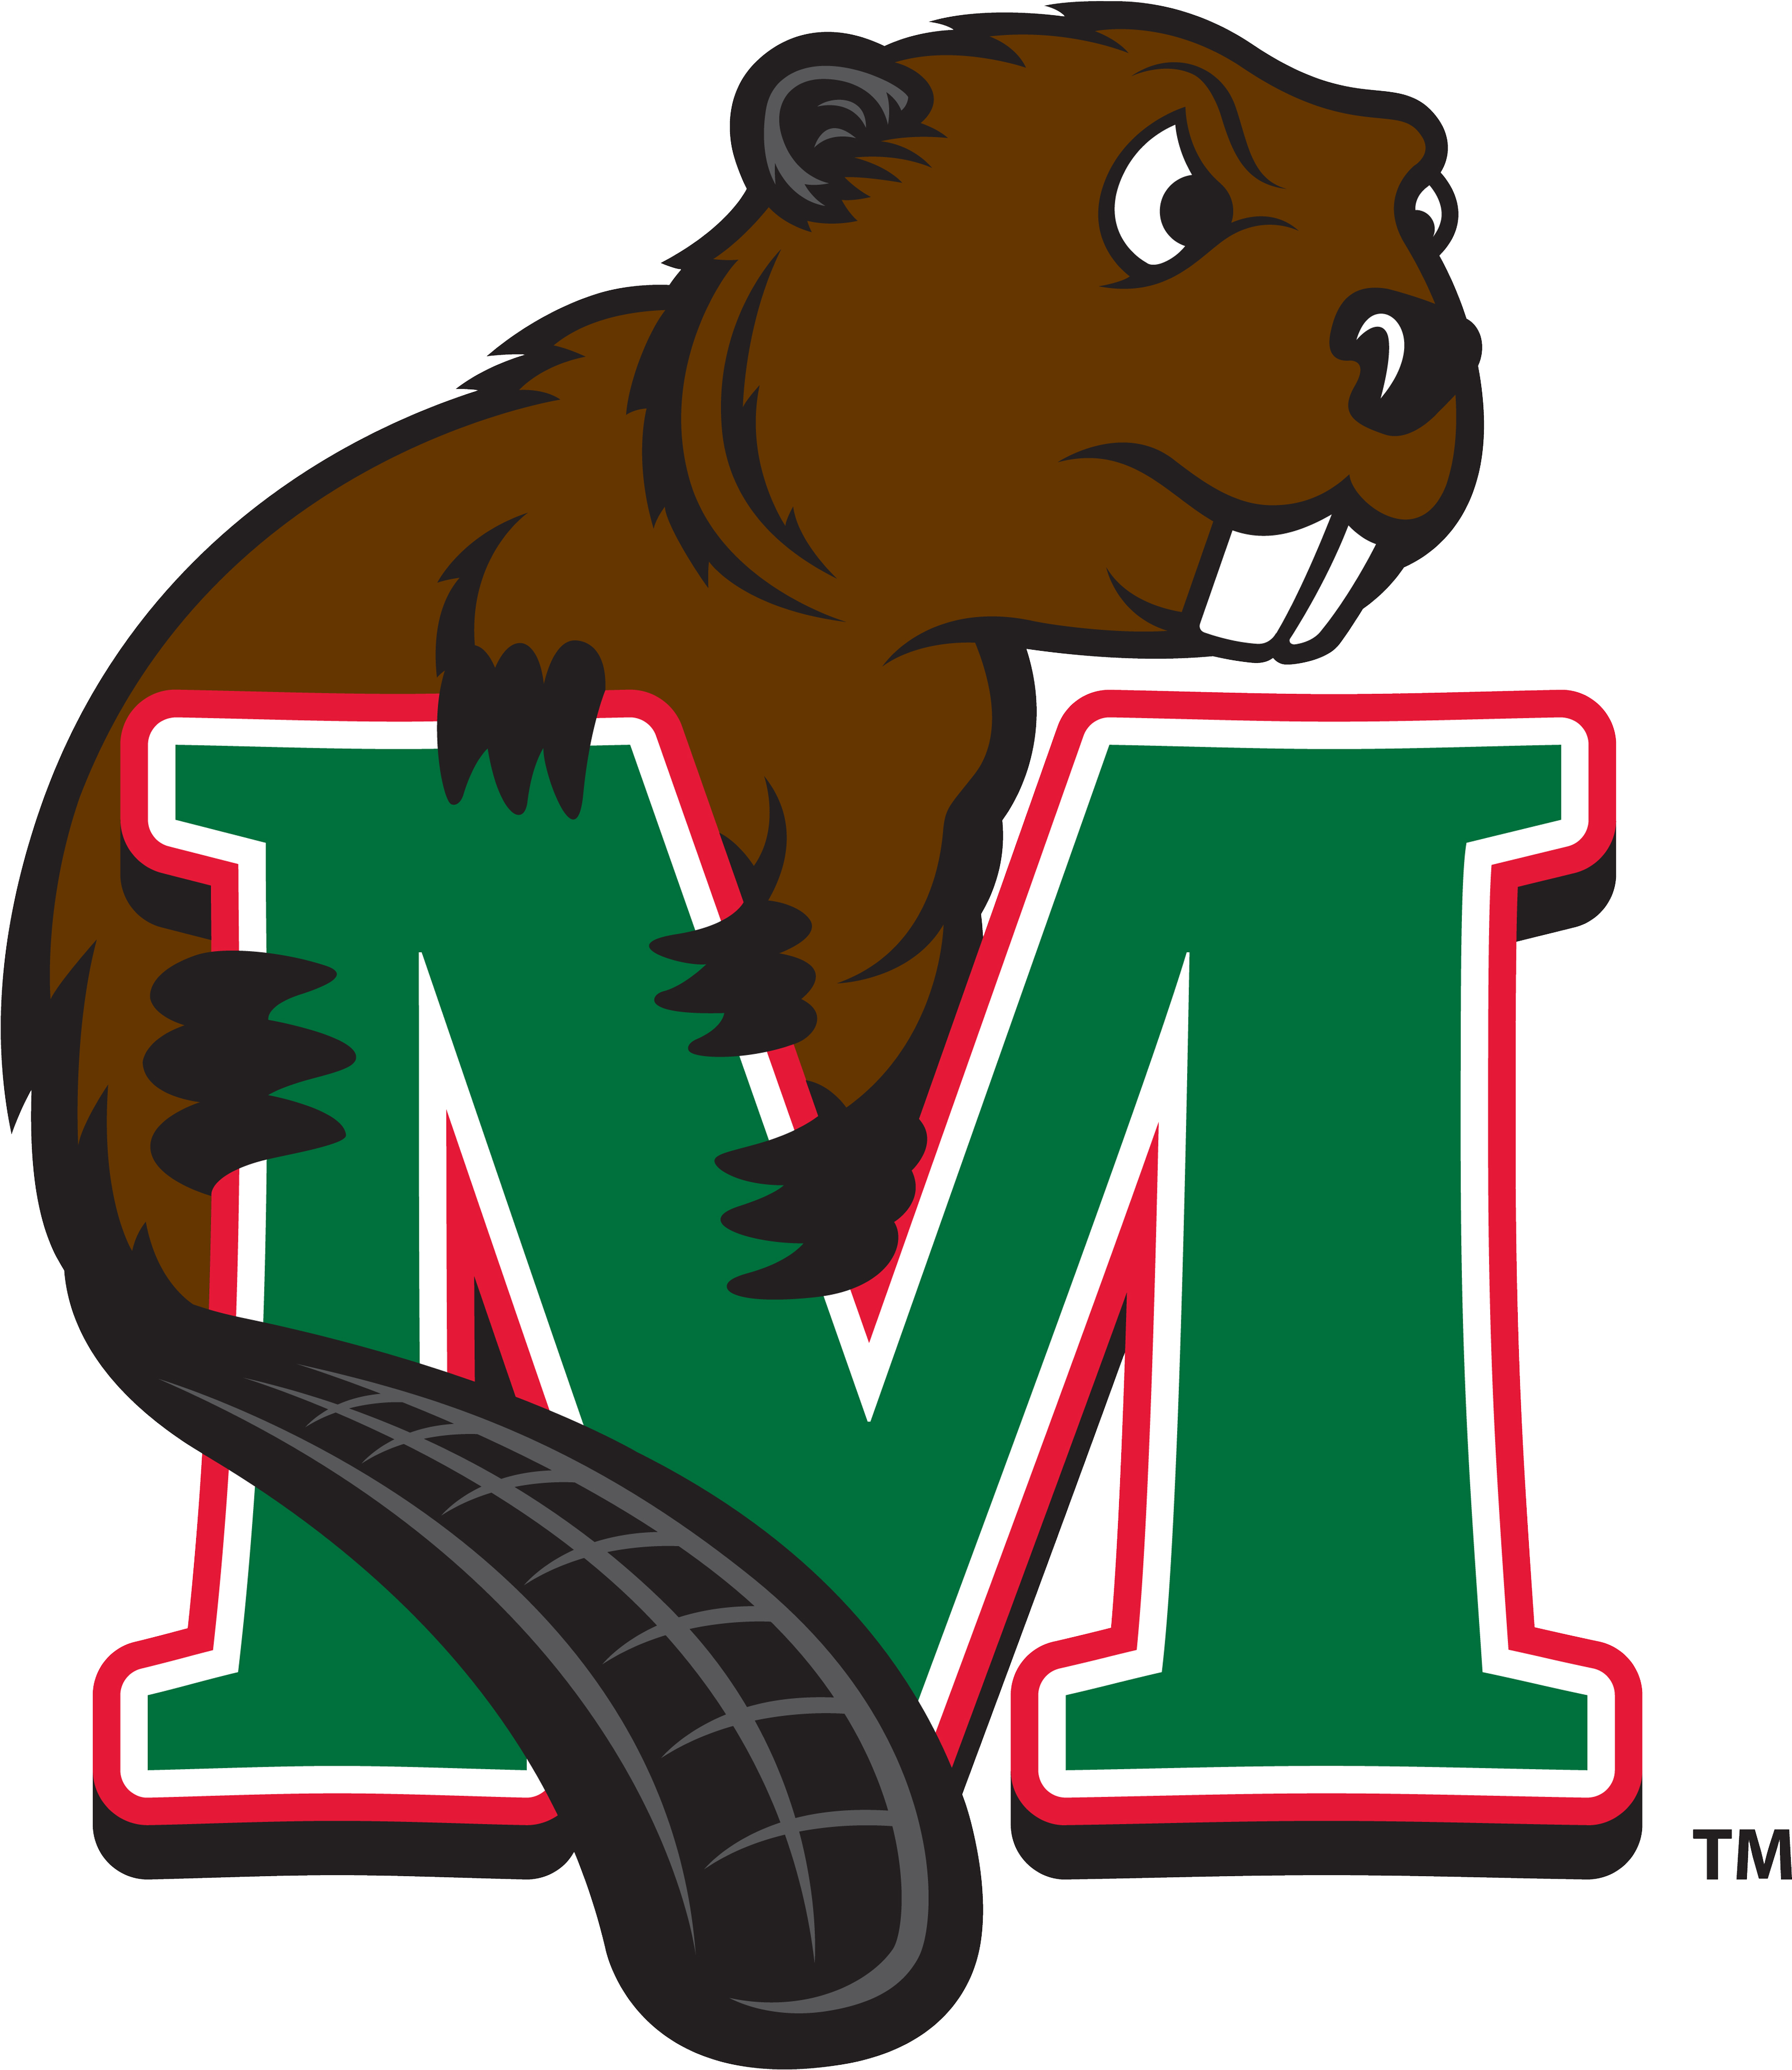 Minot State Baseball Scores, Results, Schedule, Roster - Minot State University Mascot (3949x3949)